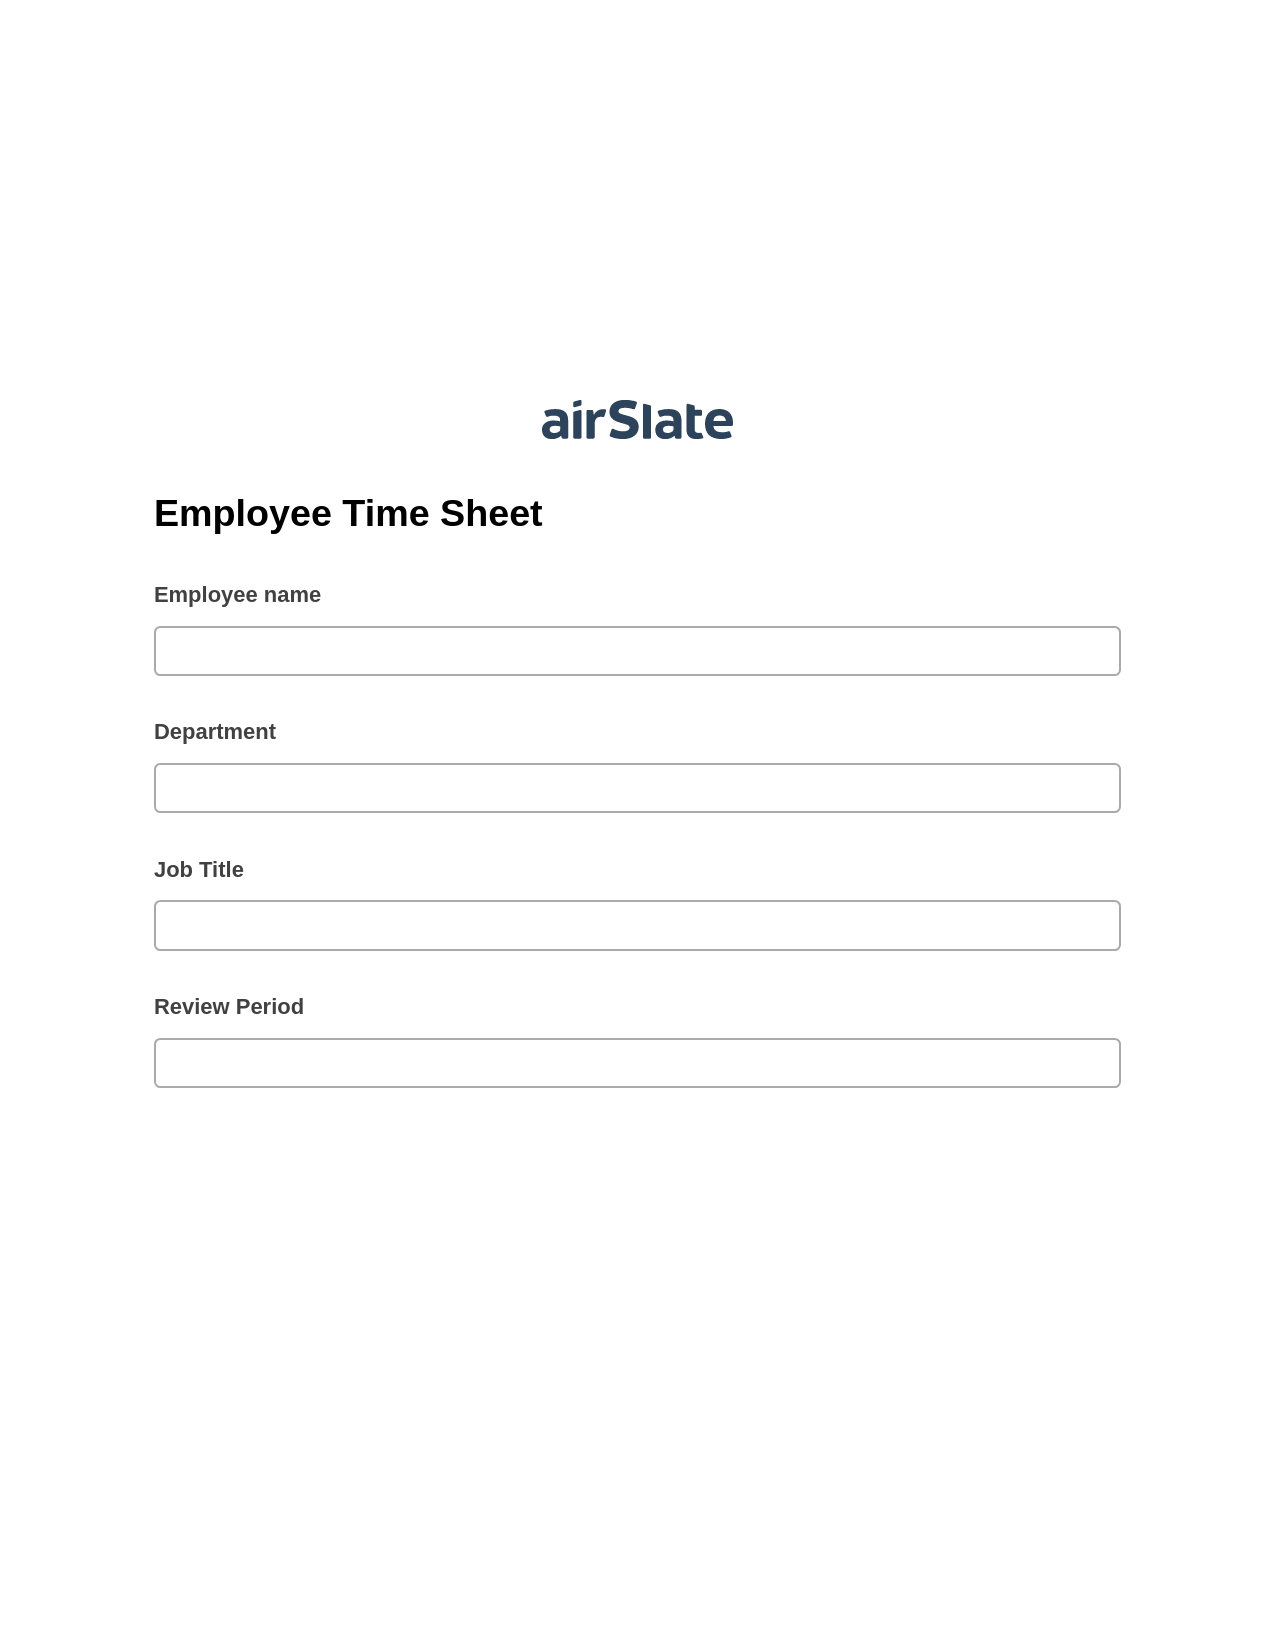 Employee Time Sheet System Bot - Slack Two-Way Binding Bot, Remove Slate Bot, Export to Smartsheet